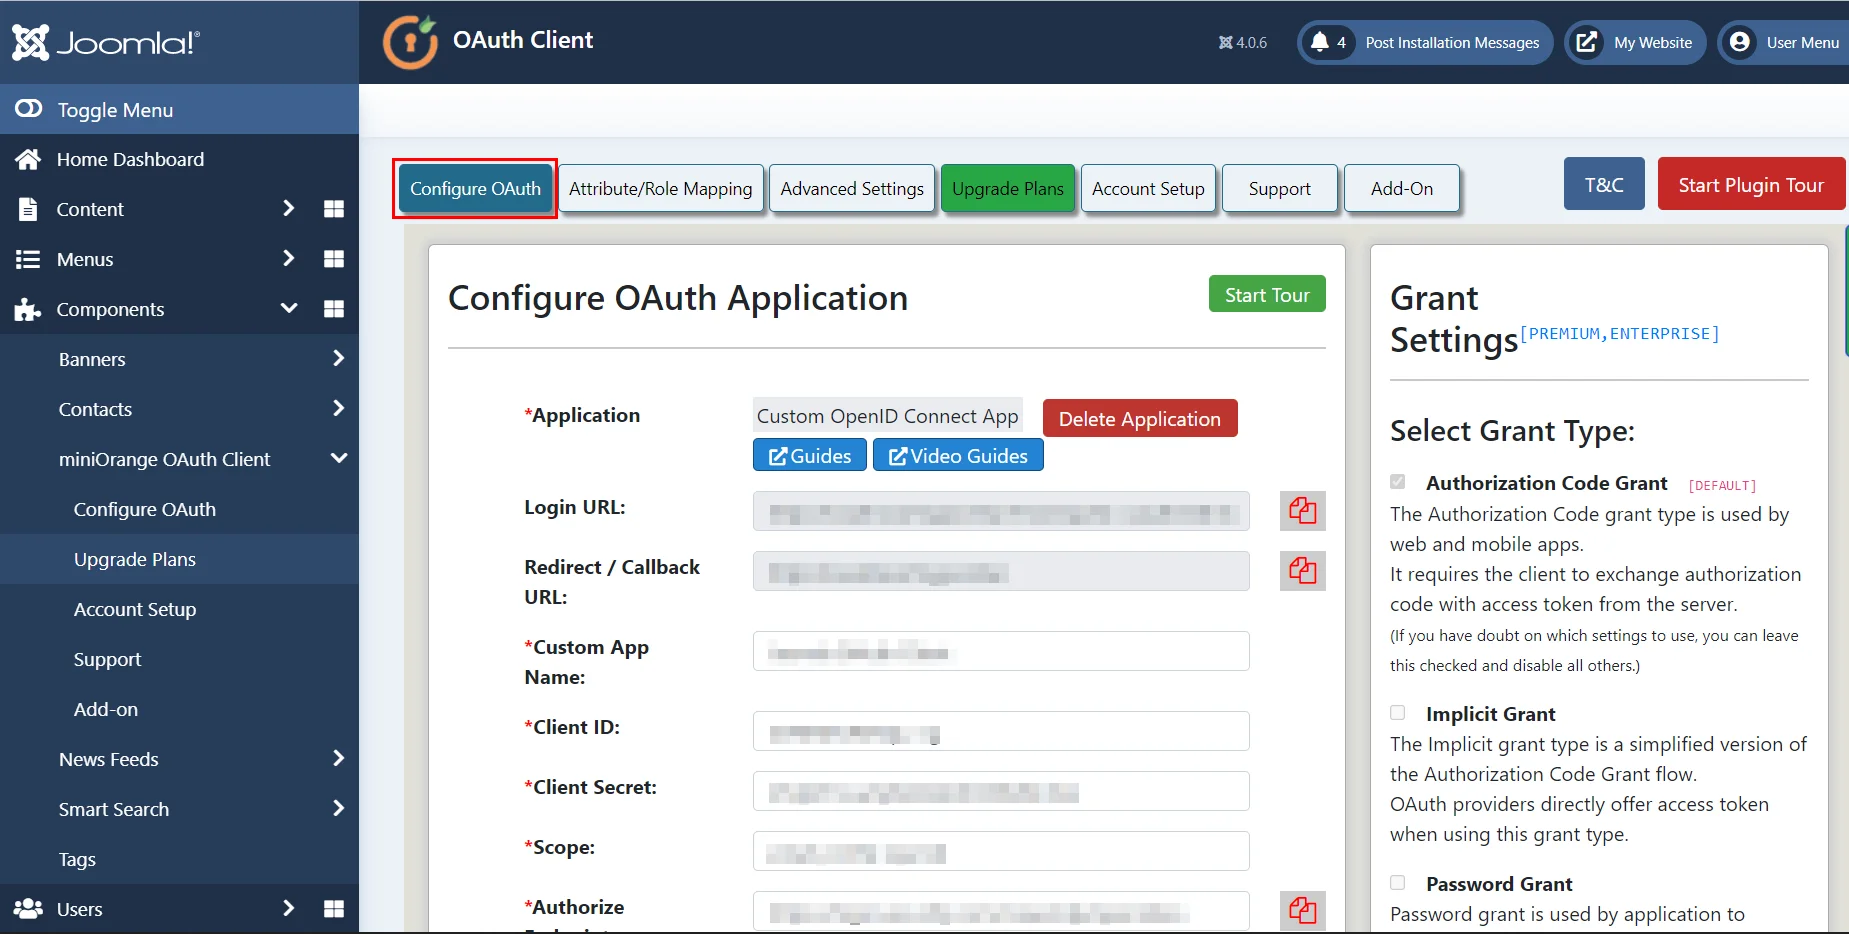 DeviantArt Single Sign-on (SSO) - OAuth Test Configuration